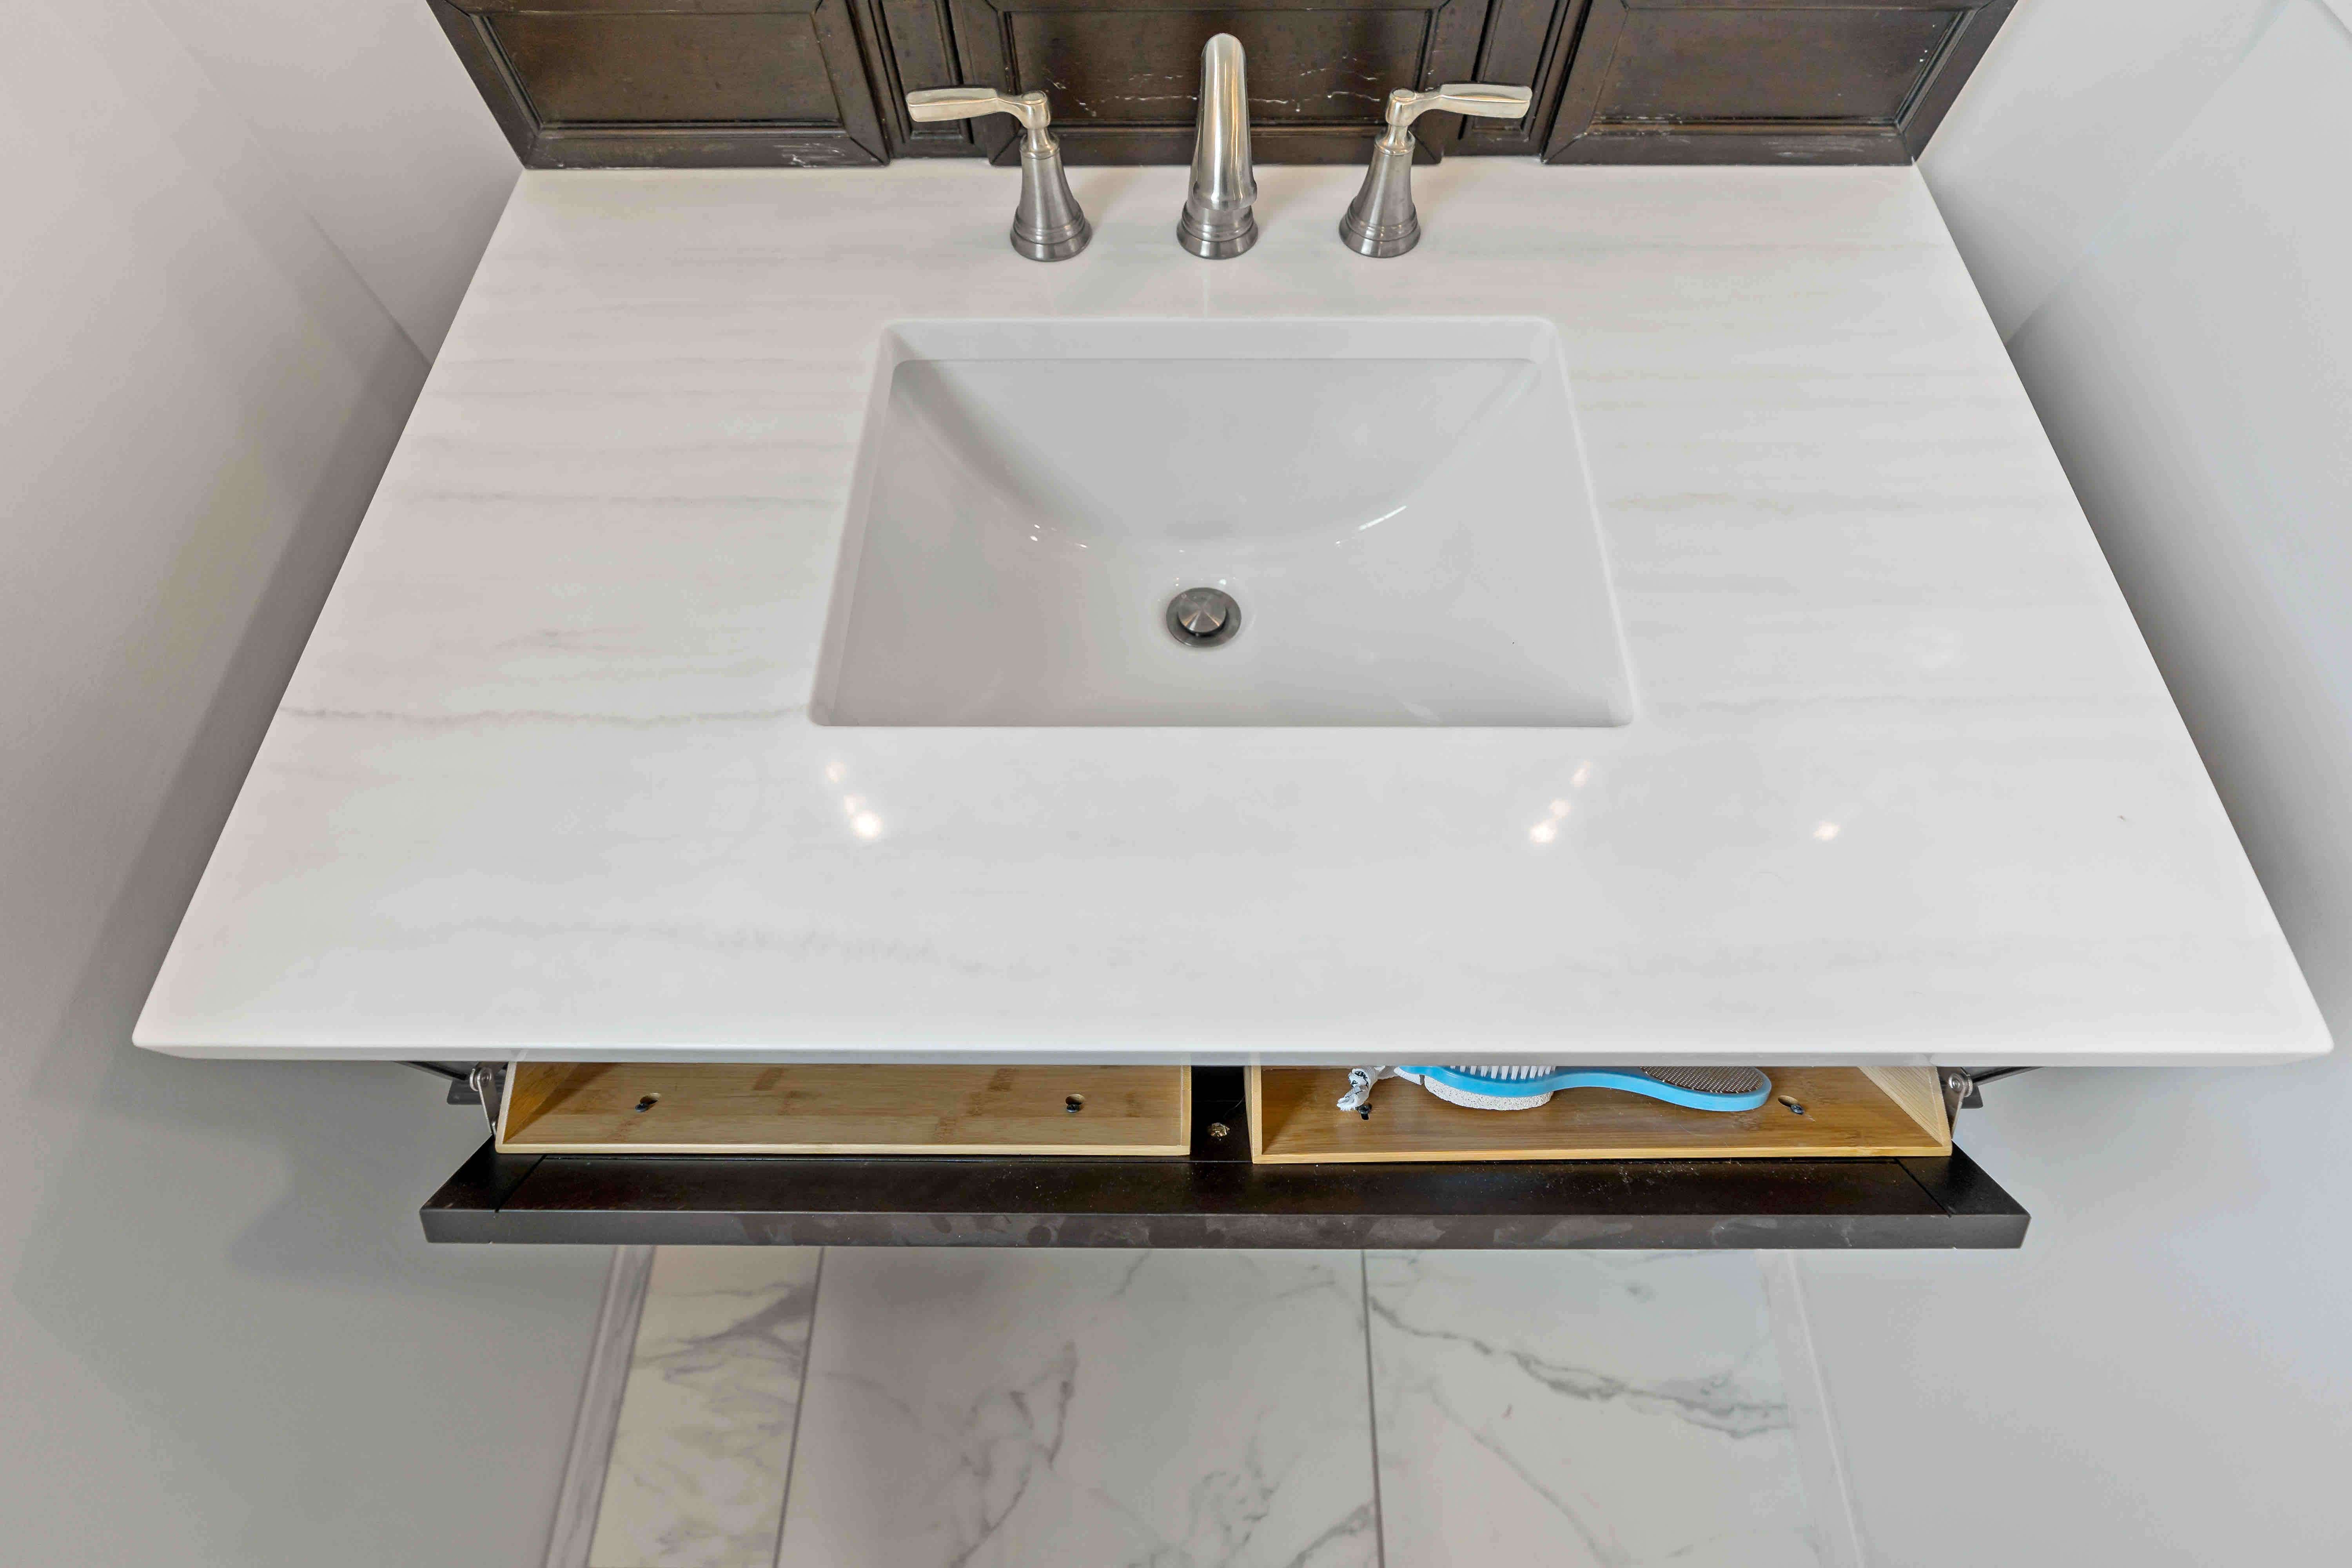 White countertop and sink in bathroom vanity